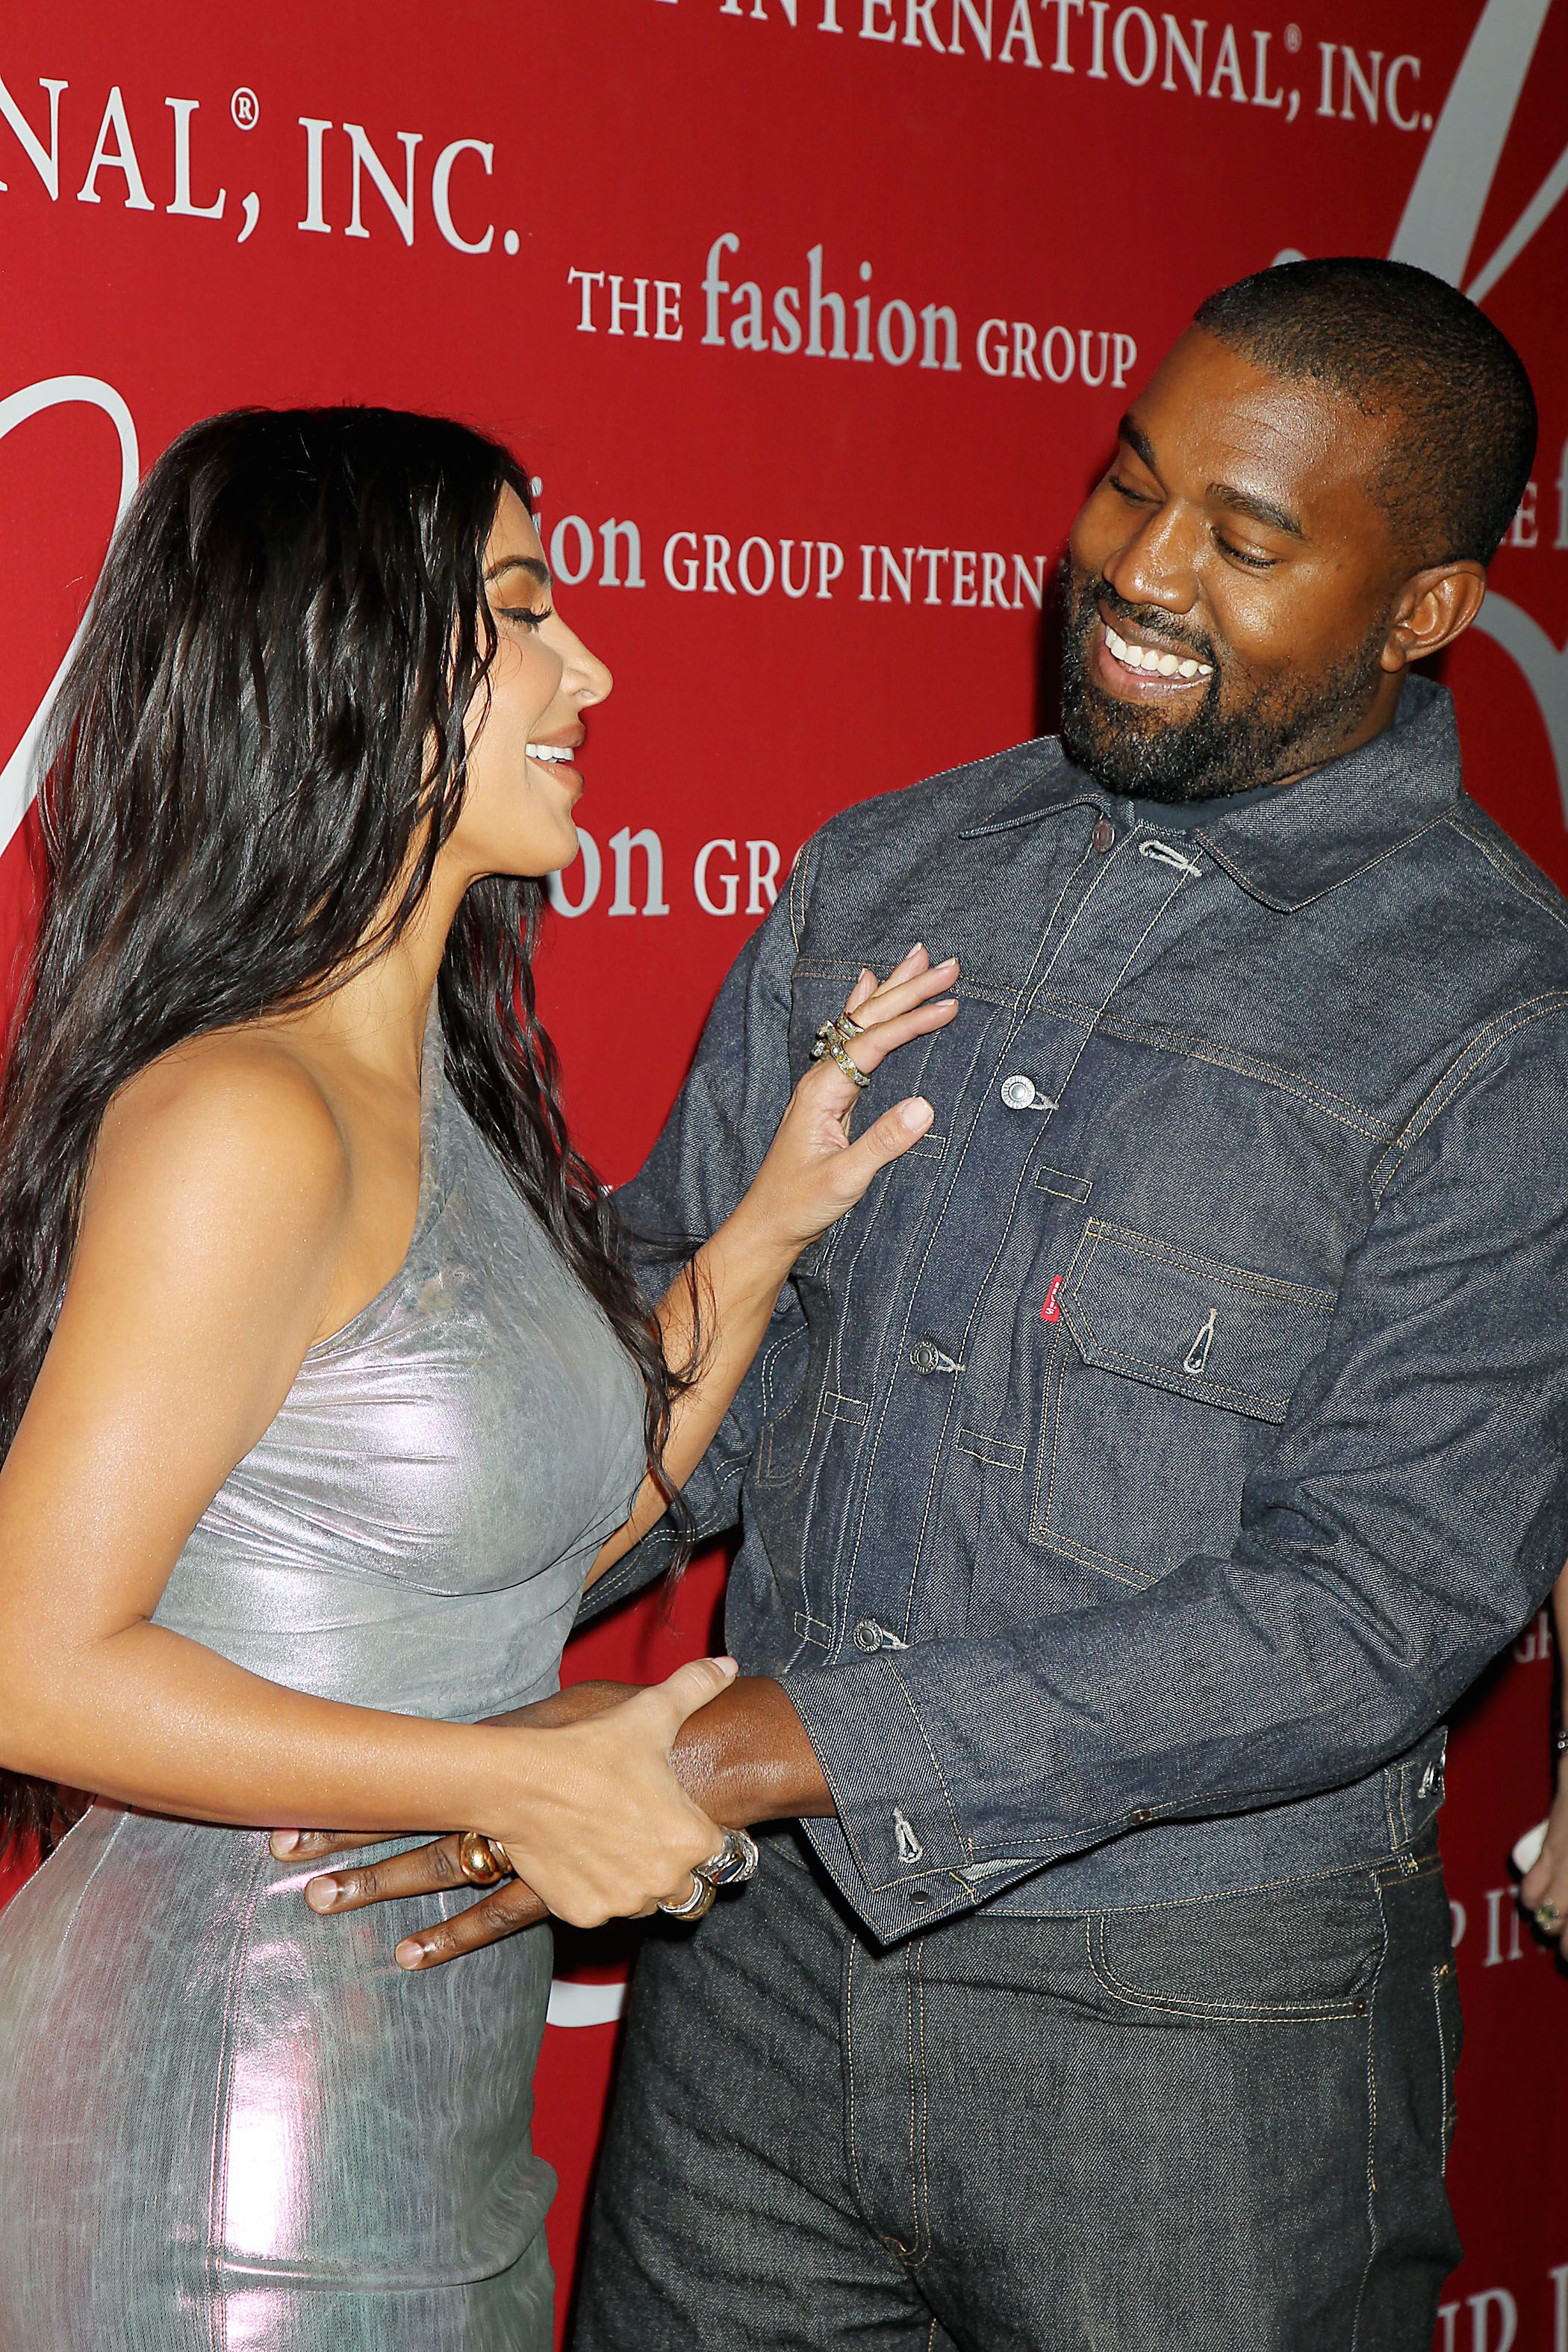 Kim Kardashian's Skims Could Be Making a Bad Bet - Bloomberg